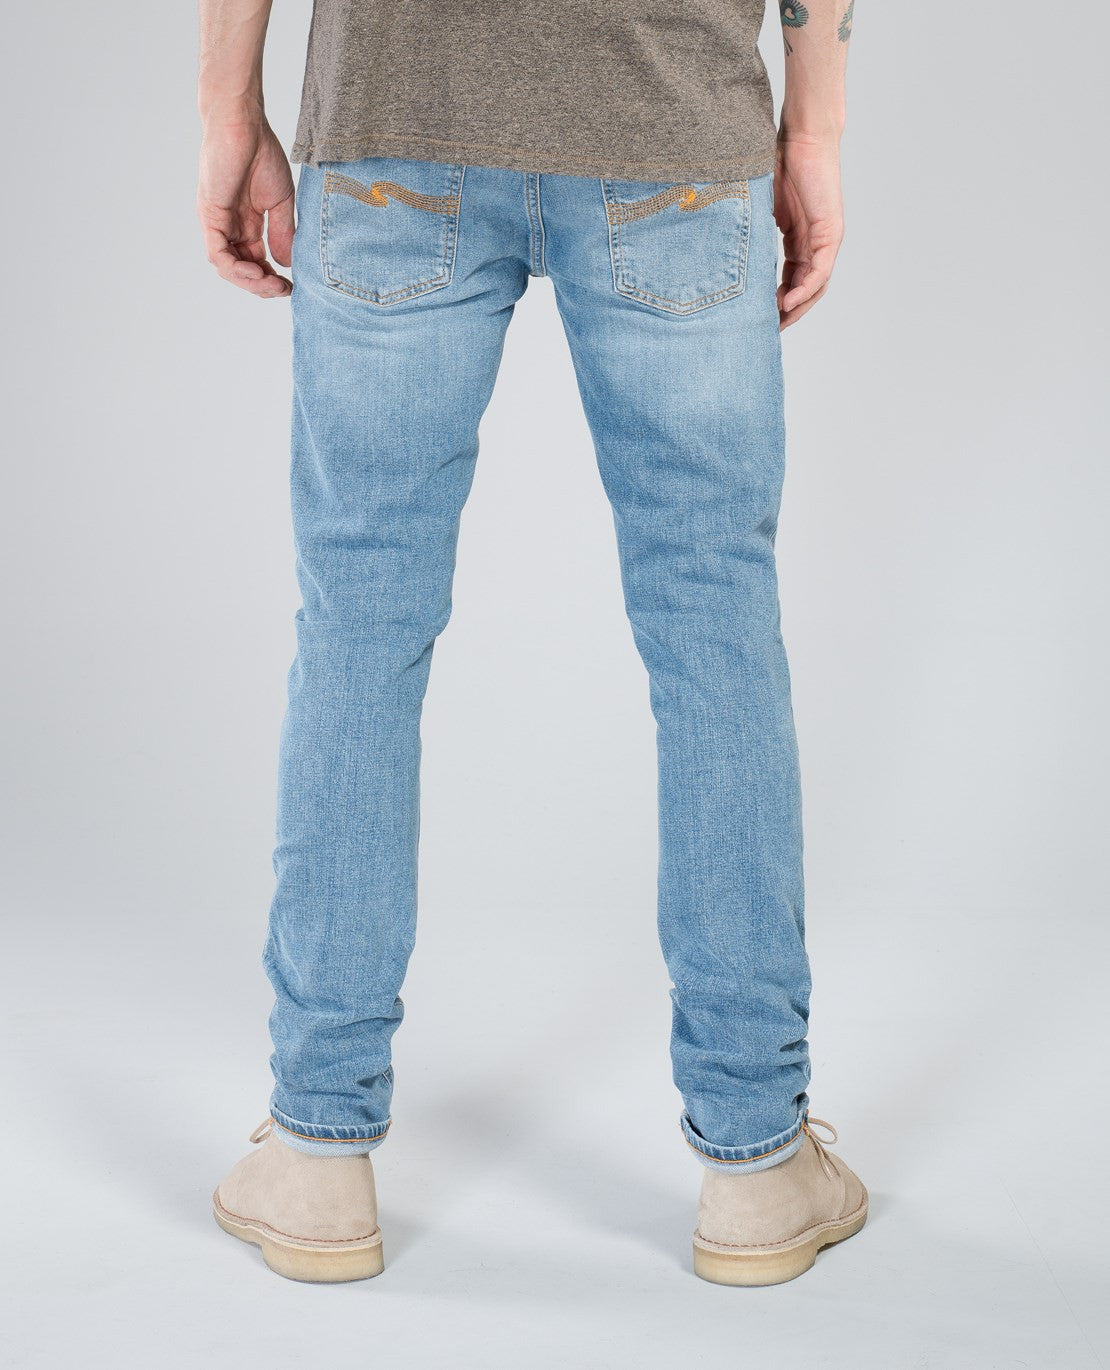 Ord rotation Arne Nudie Jeans Tight Long John Saltwater Indigo - Mildblend Supply Co